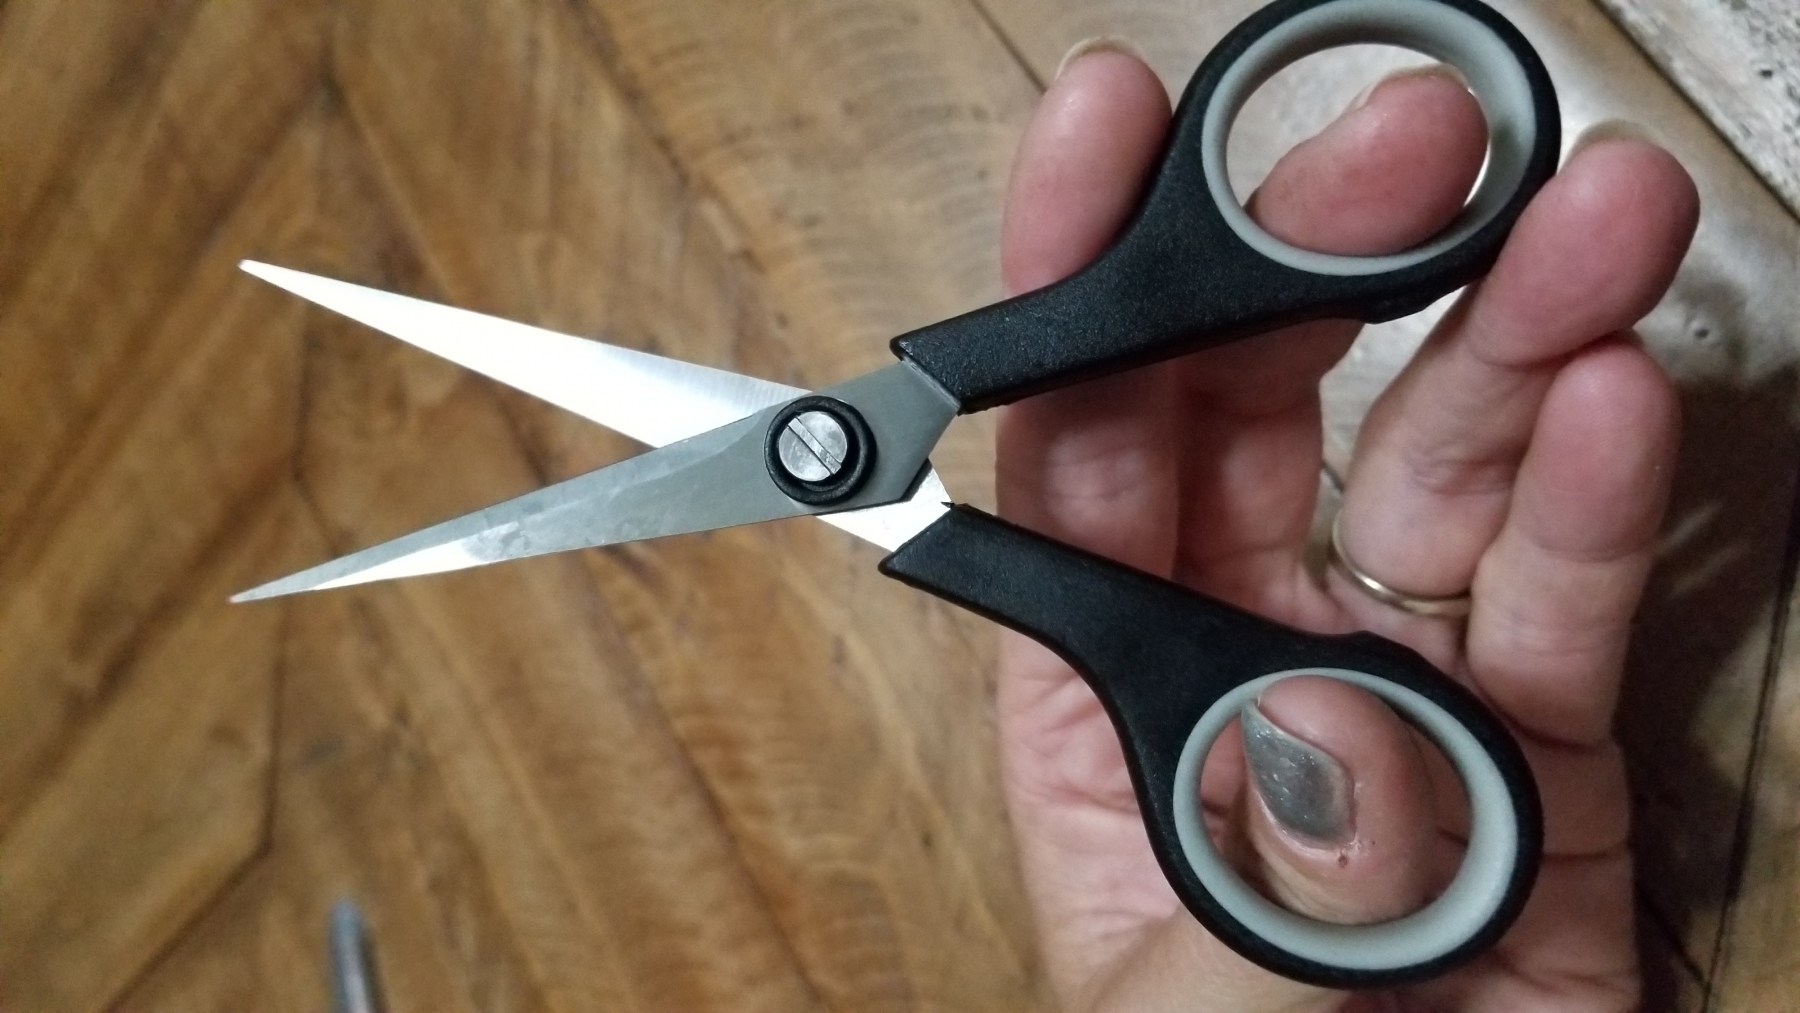 Great set of scissors